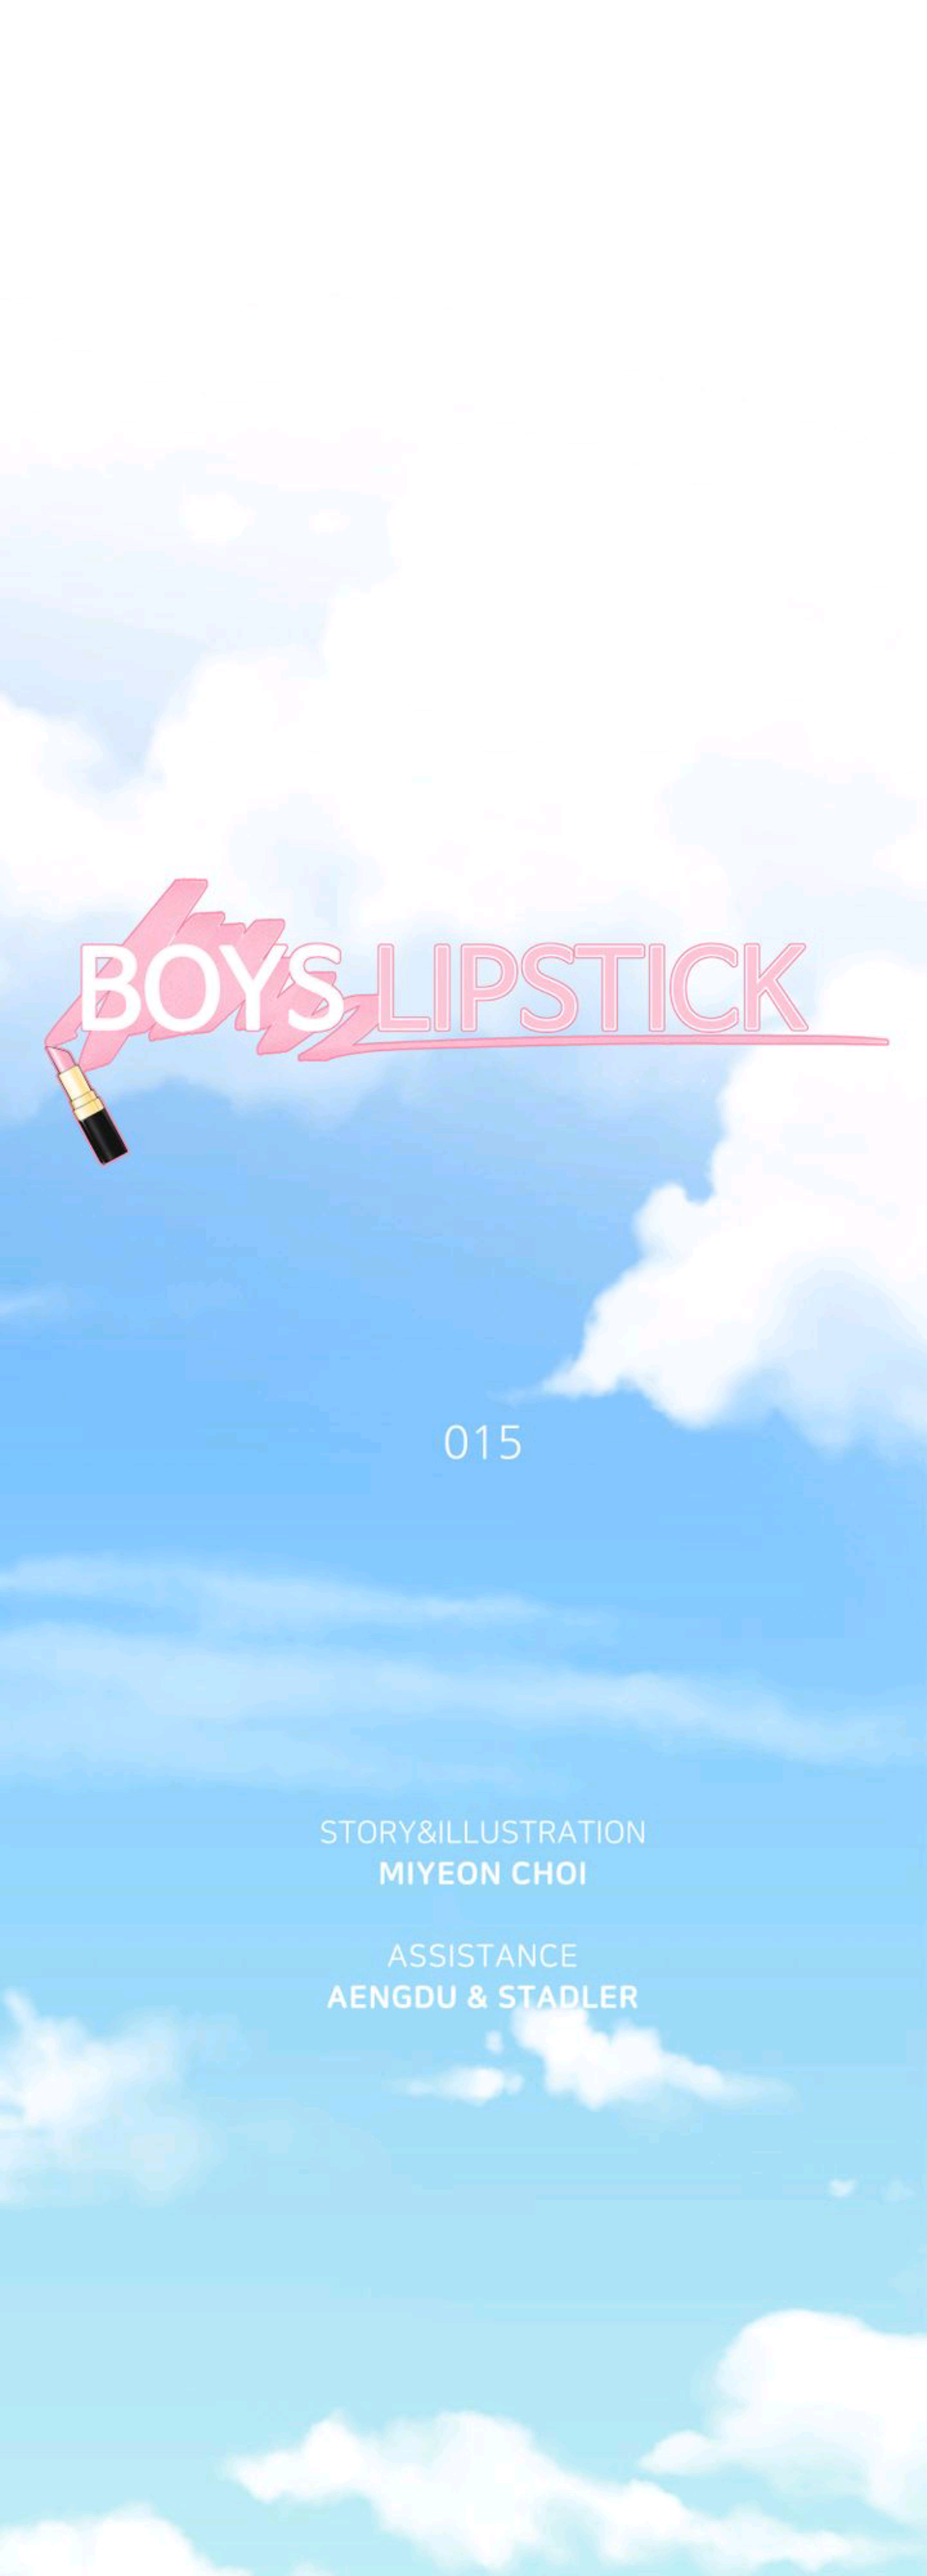 Boy's Lipstick - Page 2